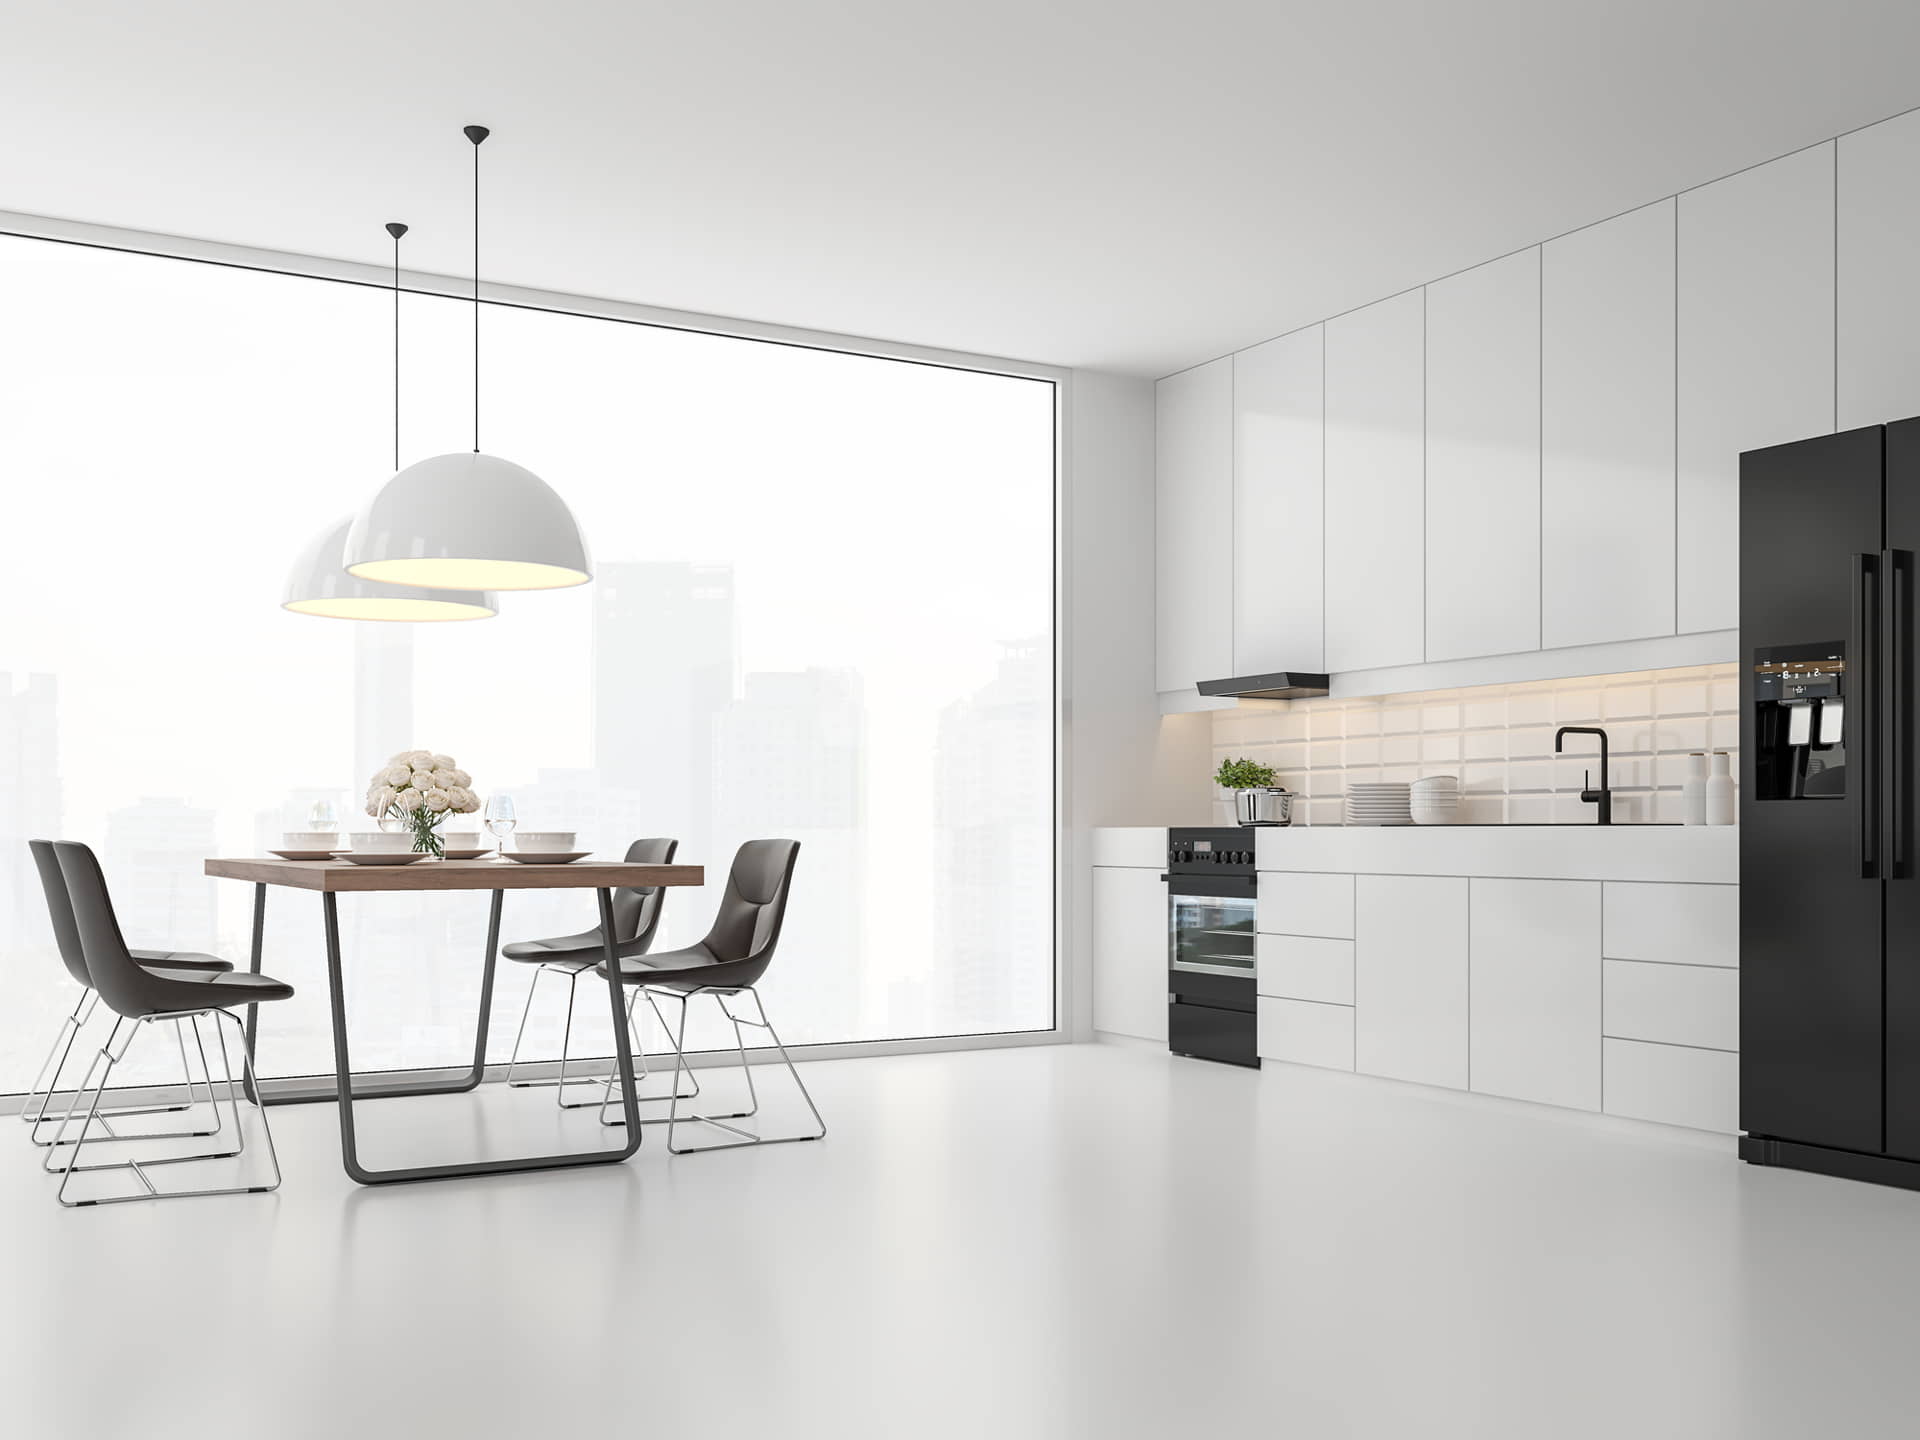 Dapur modern yang cerah dengan lantai mikrosemen berwarna putih